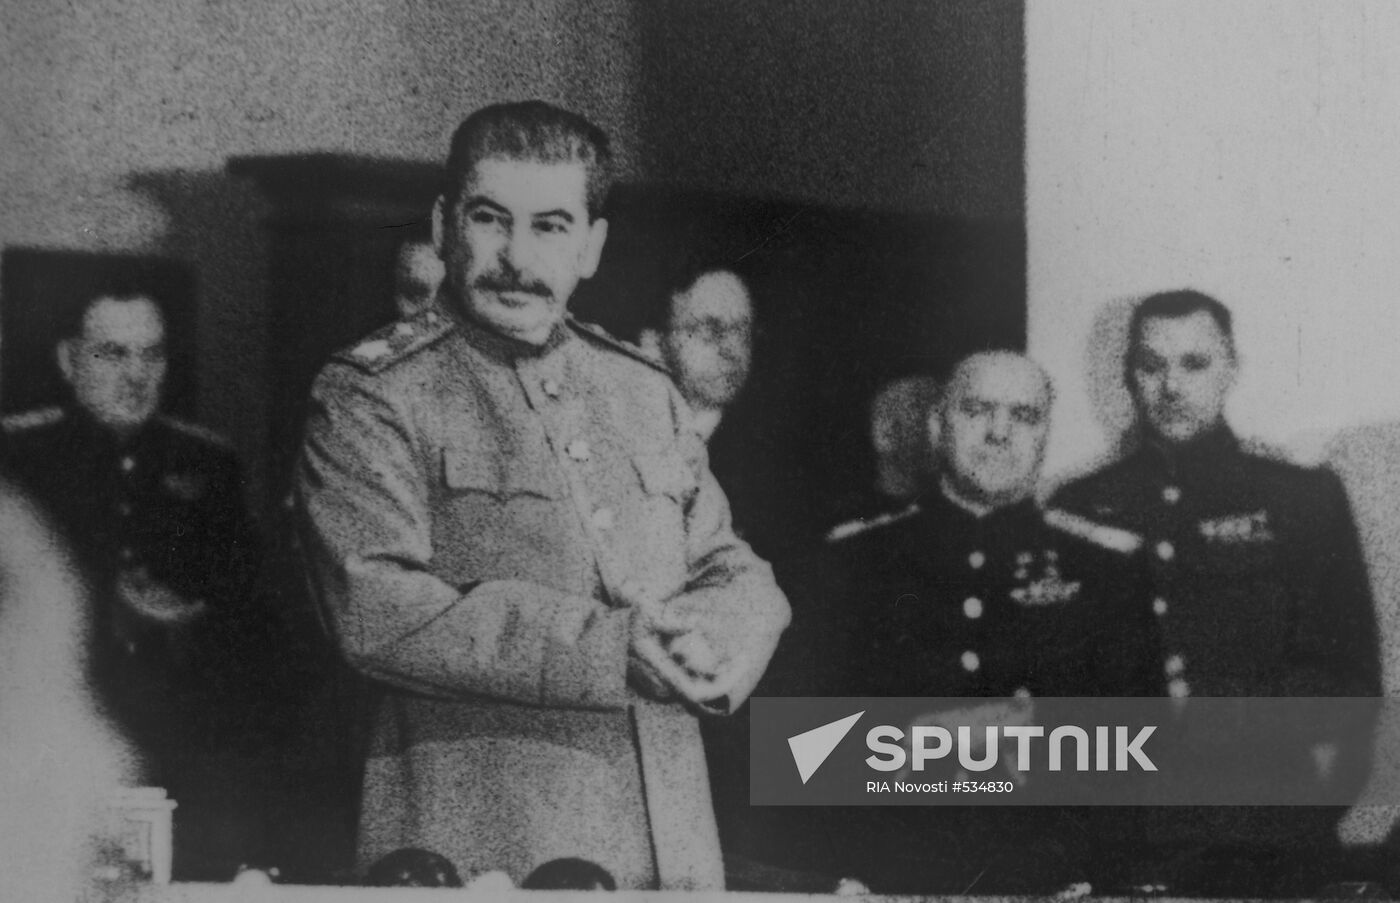 Joseph Stalin. Photocopy